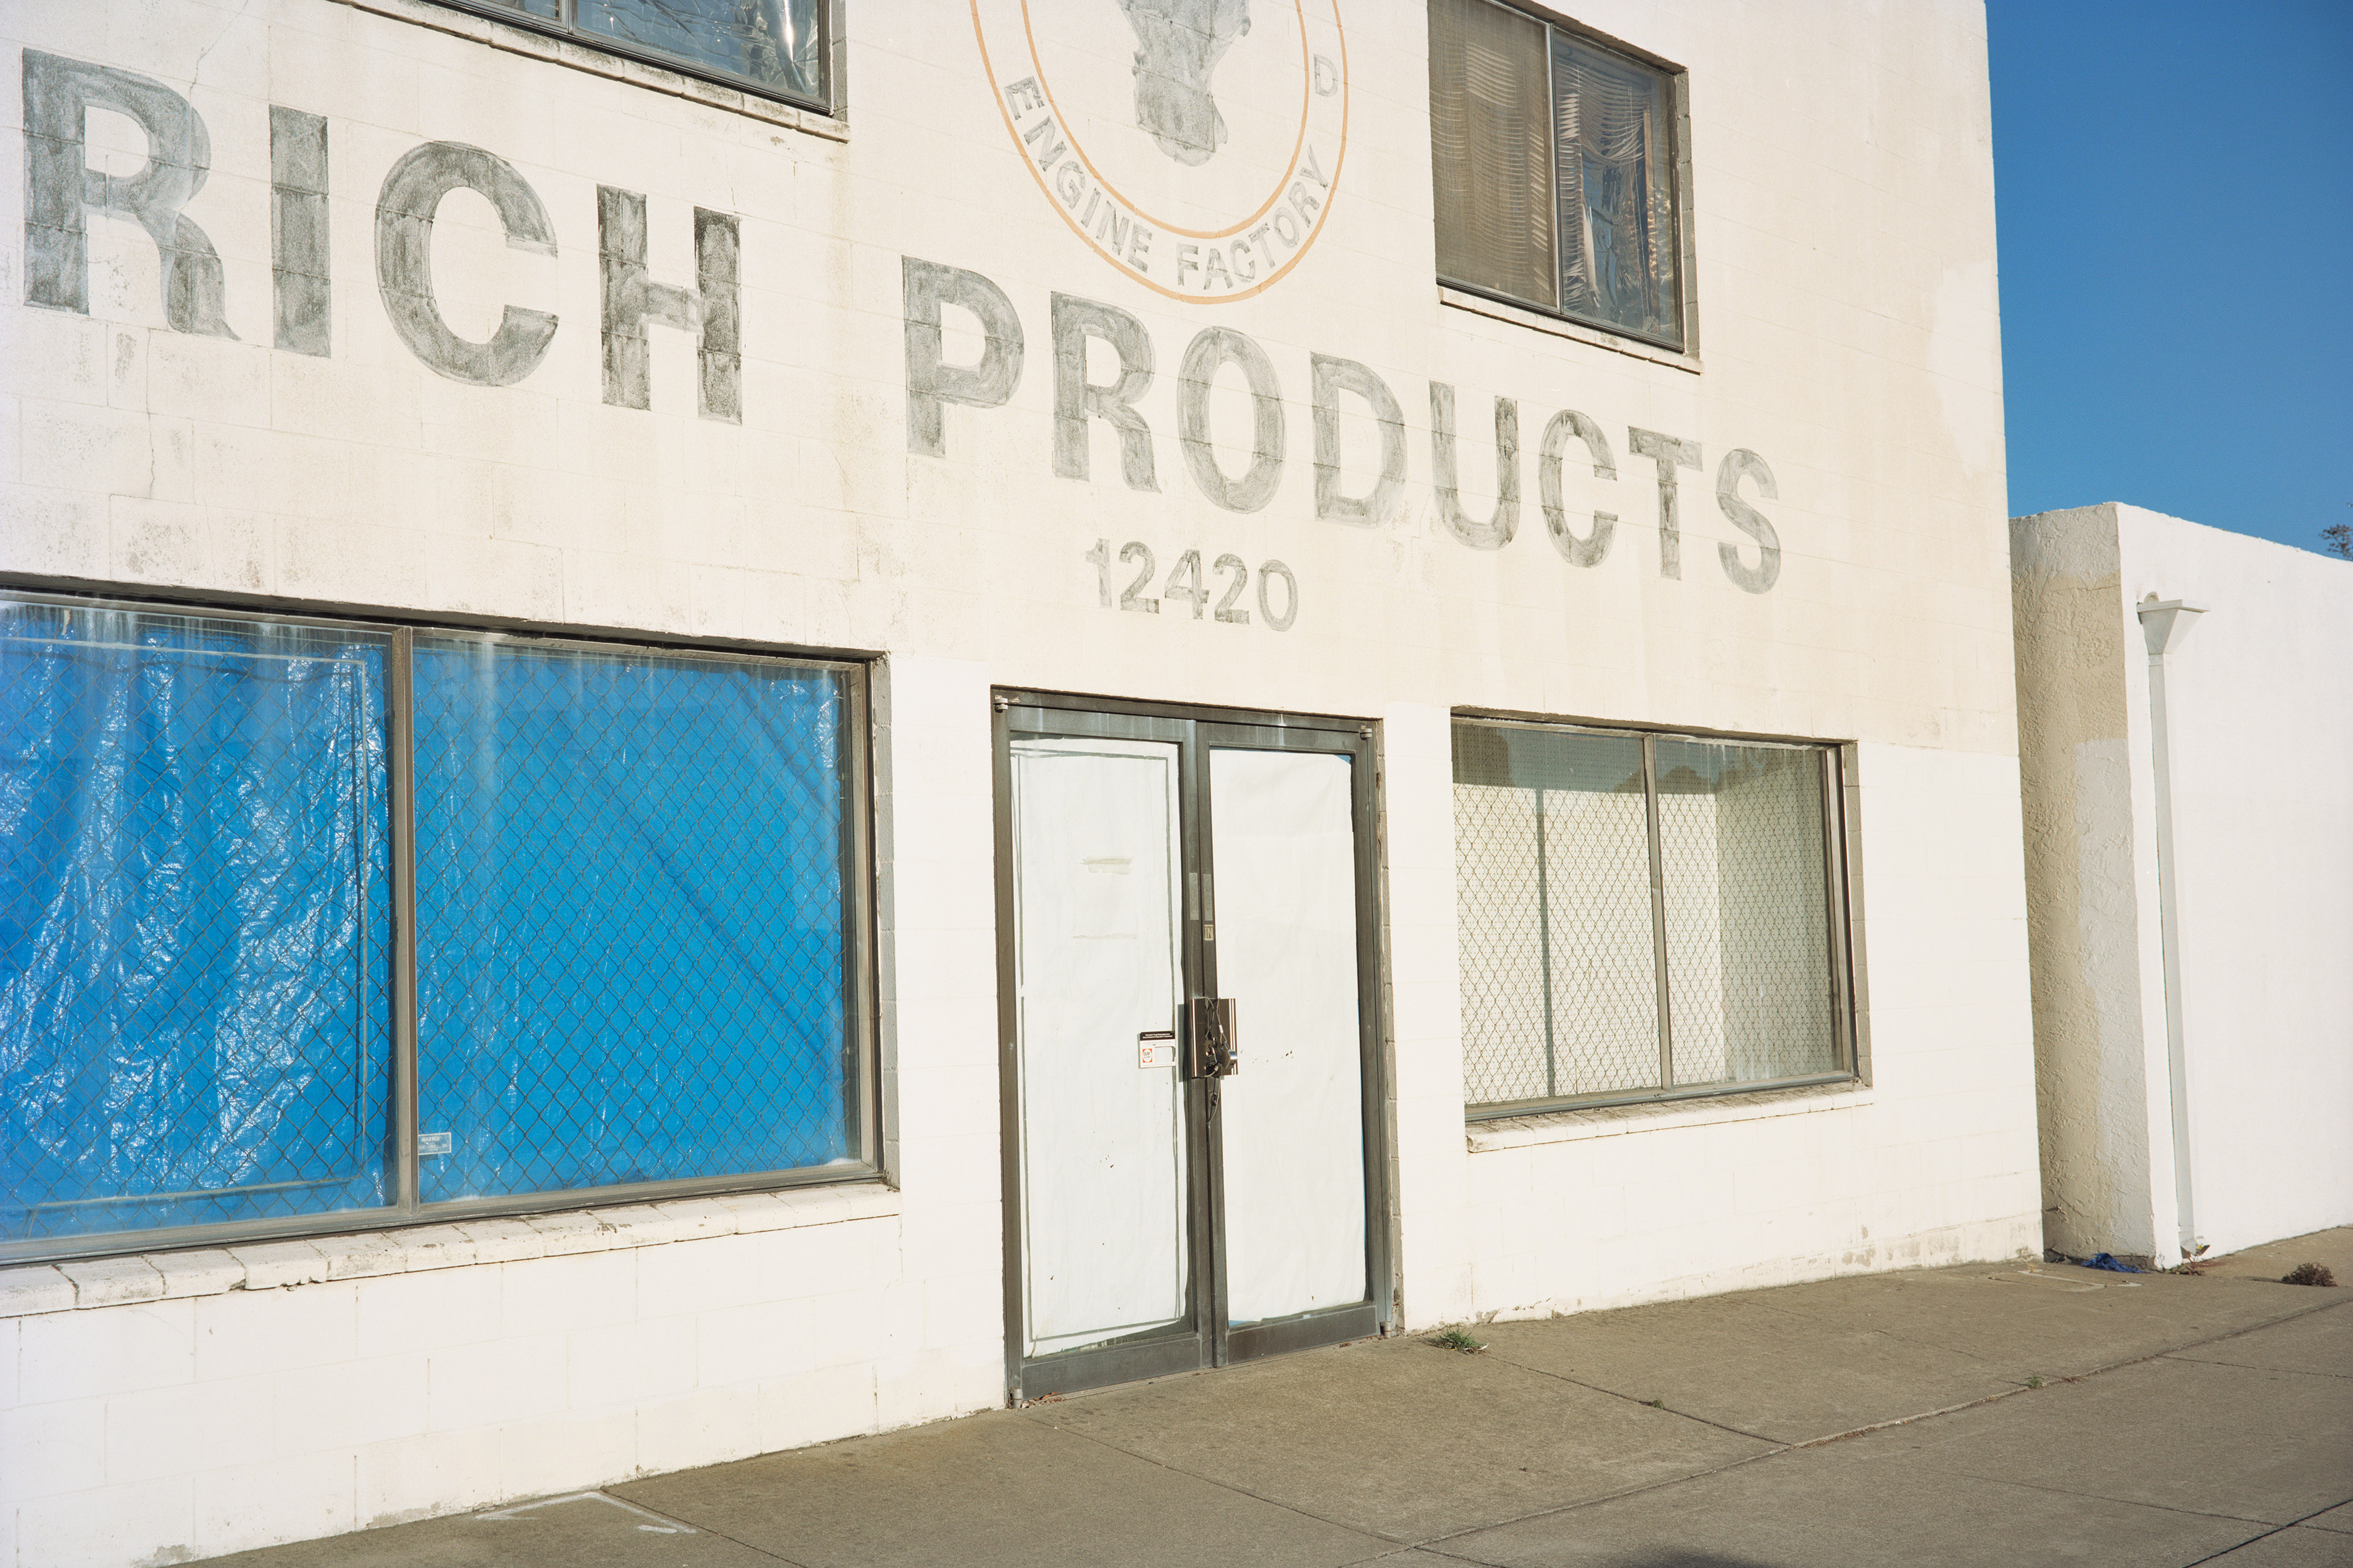 Rich Products, Richmond, California